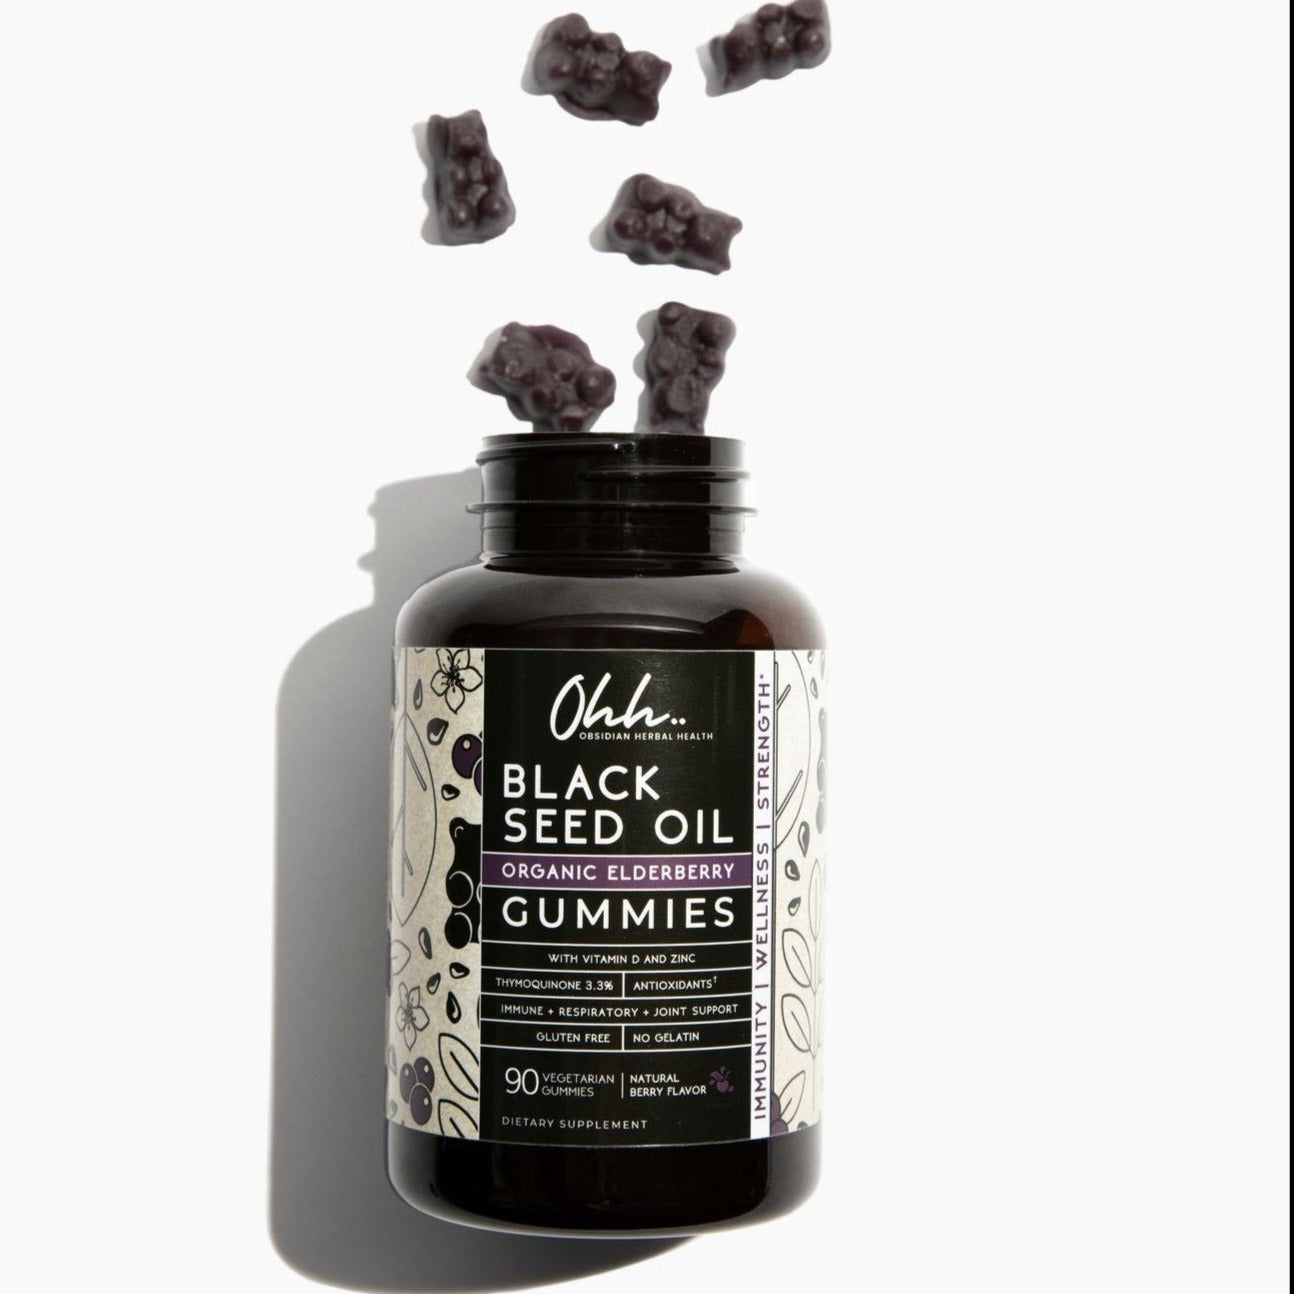 Organic black seed oil gummies with elderberry: gummy bears